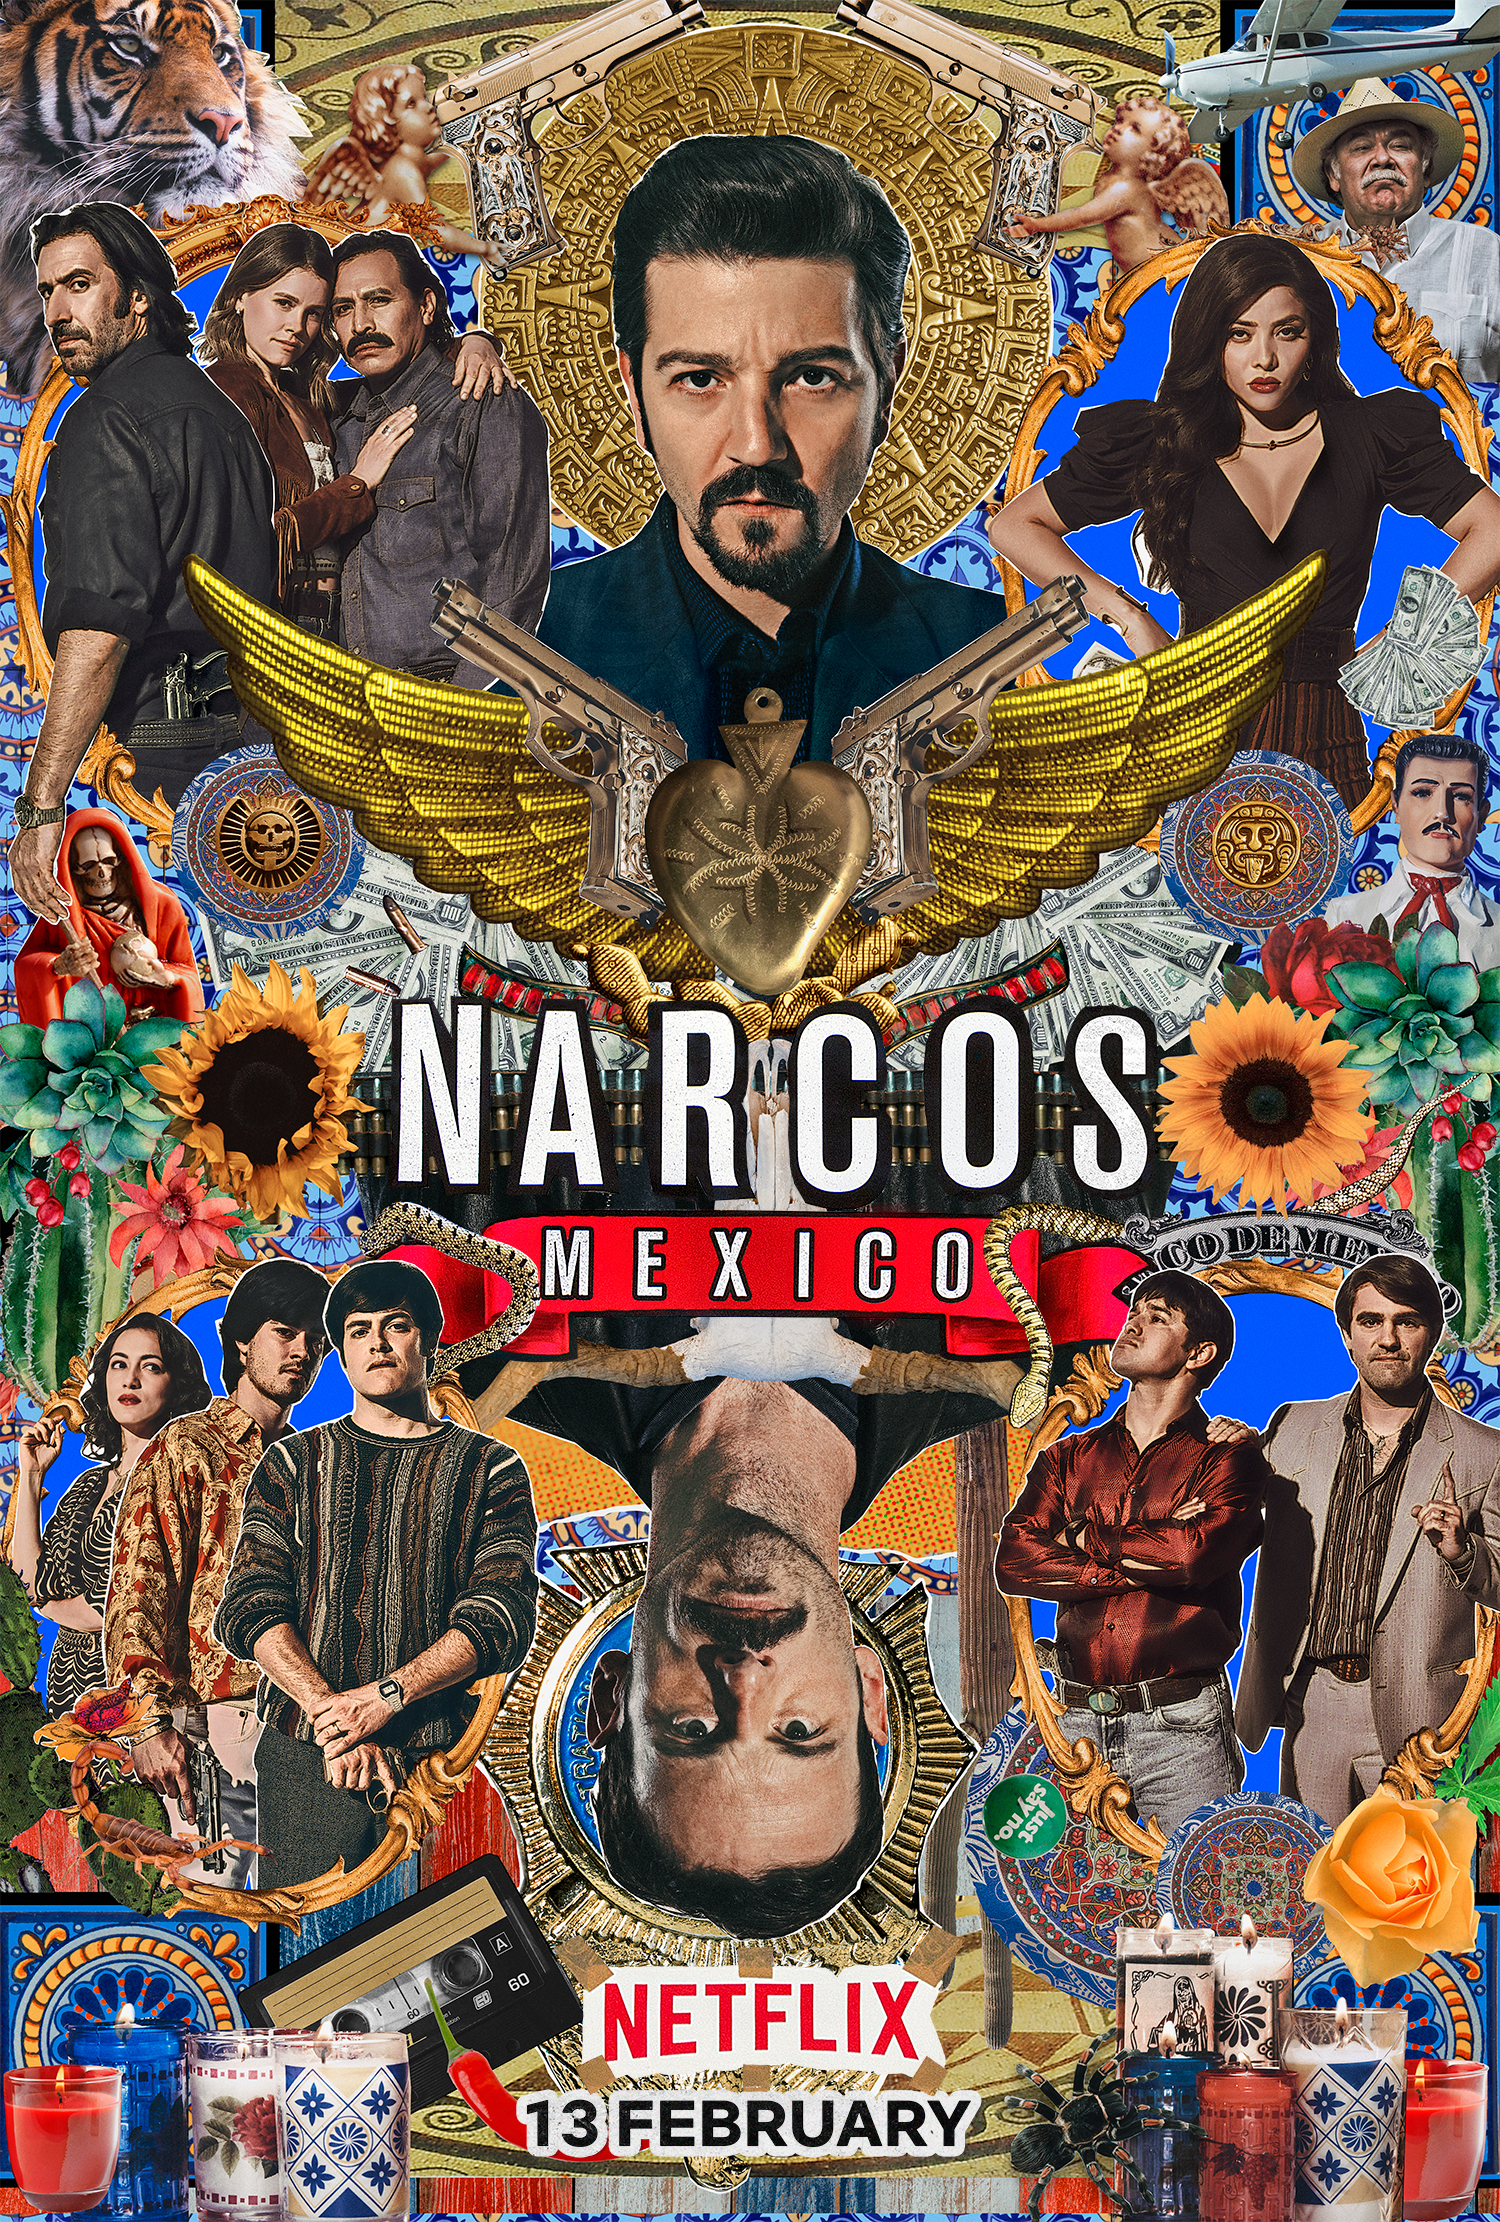 Stiahni si Seriál Narcos: Mexiko / Narcos: Mexico S01E05 (CZ)[WebRip][1080p] = CSFD 86%